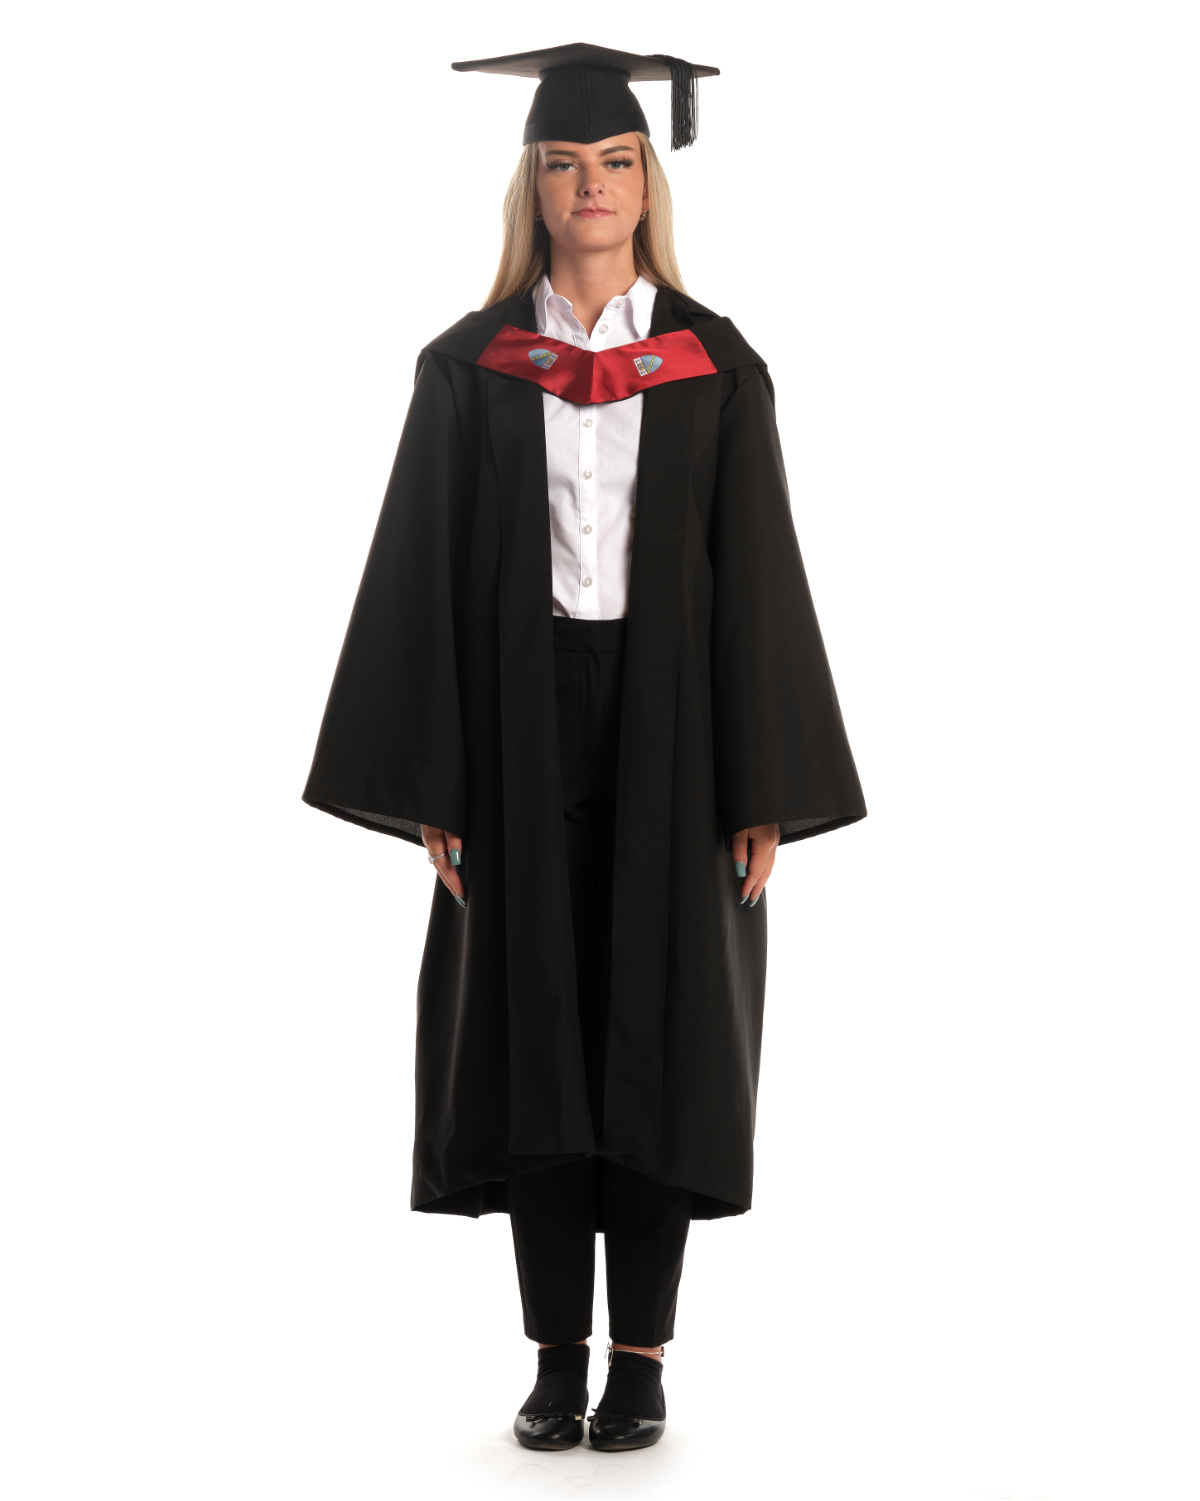 Aston University | Undergraduate Certificate & Diploma Gown, Cap and Hood Set